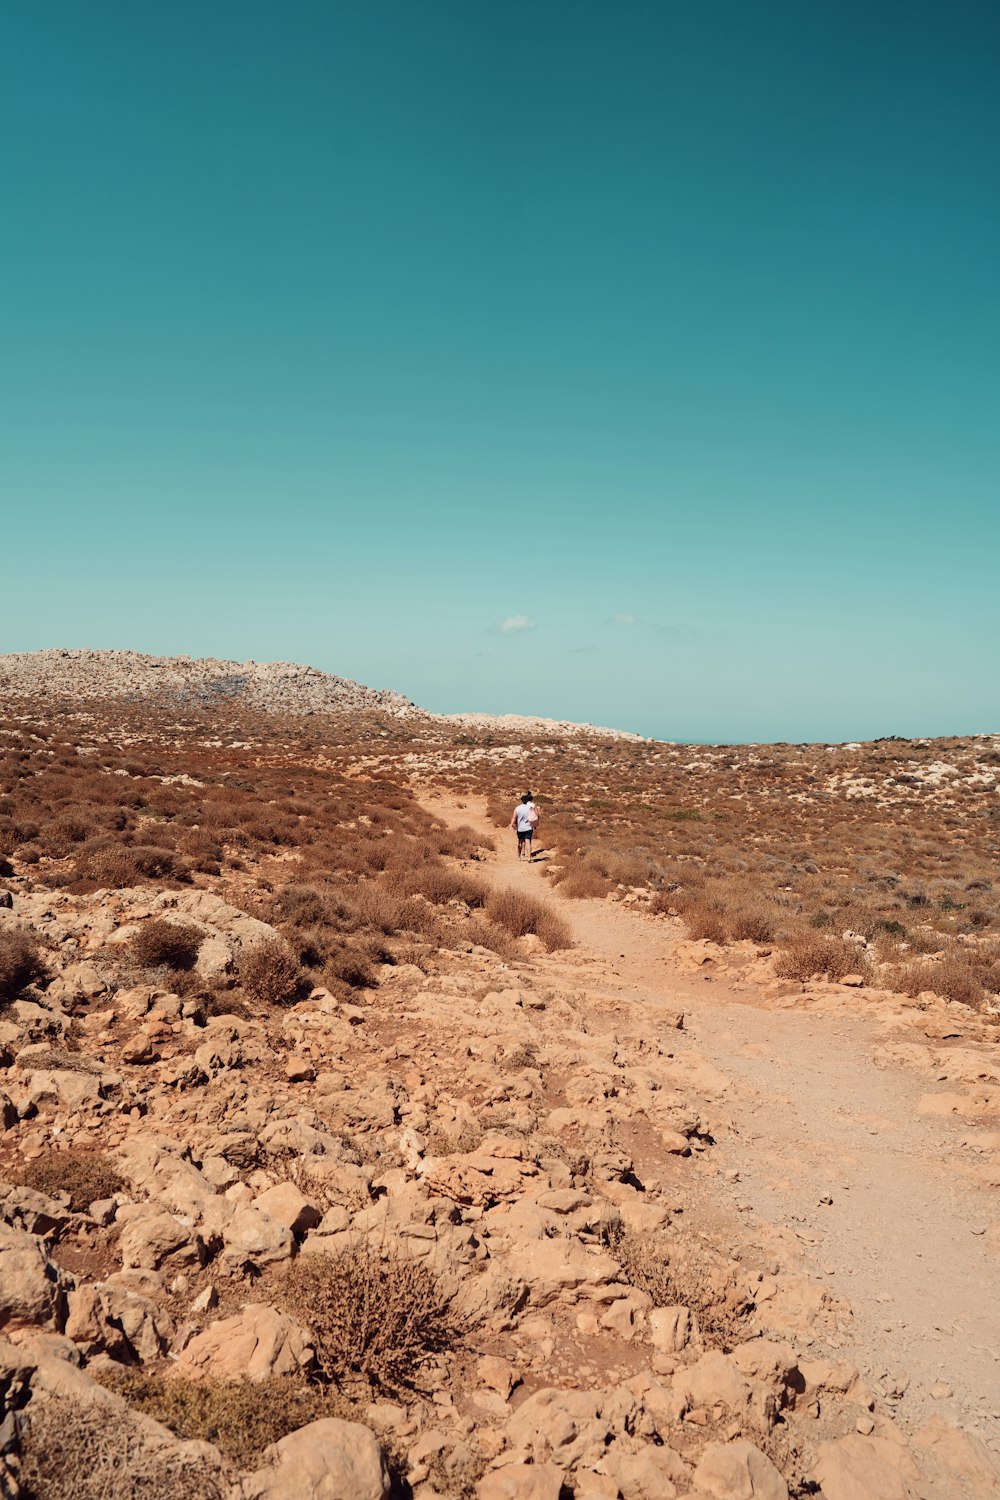 a person walking down a dirt path in the desert